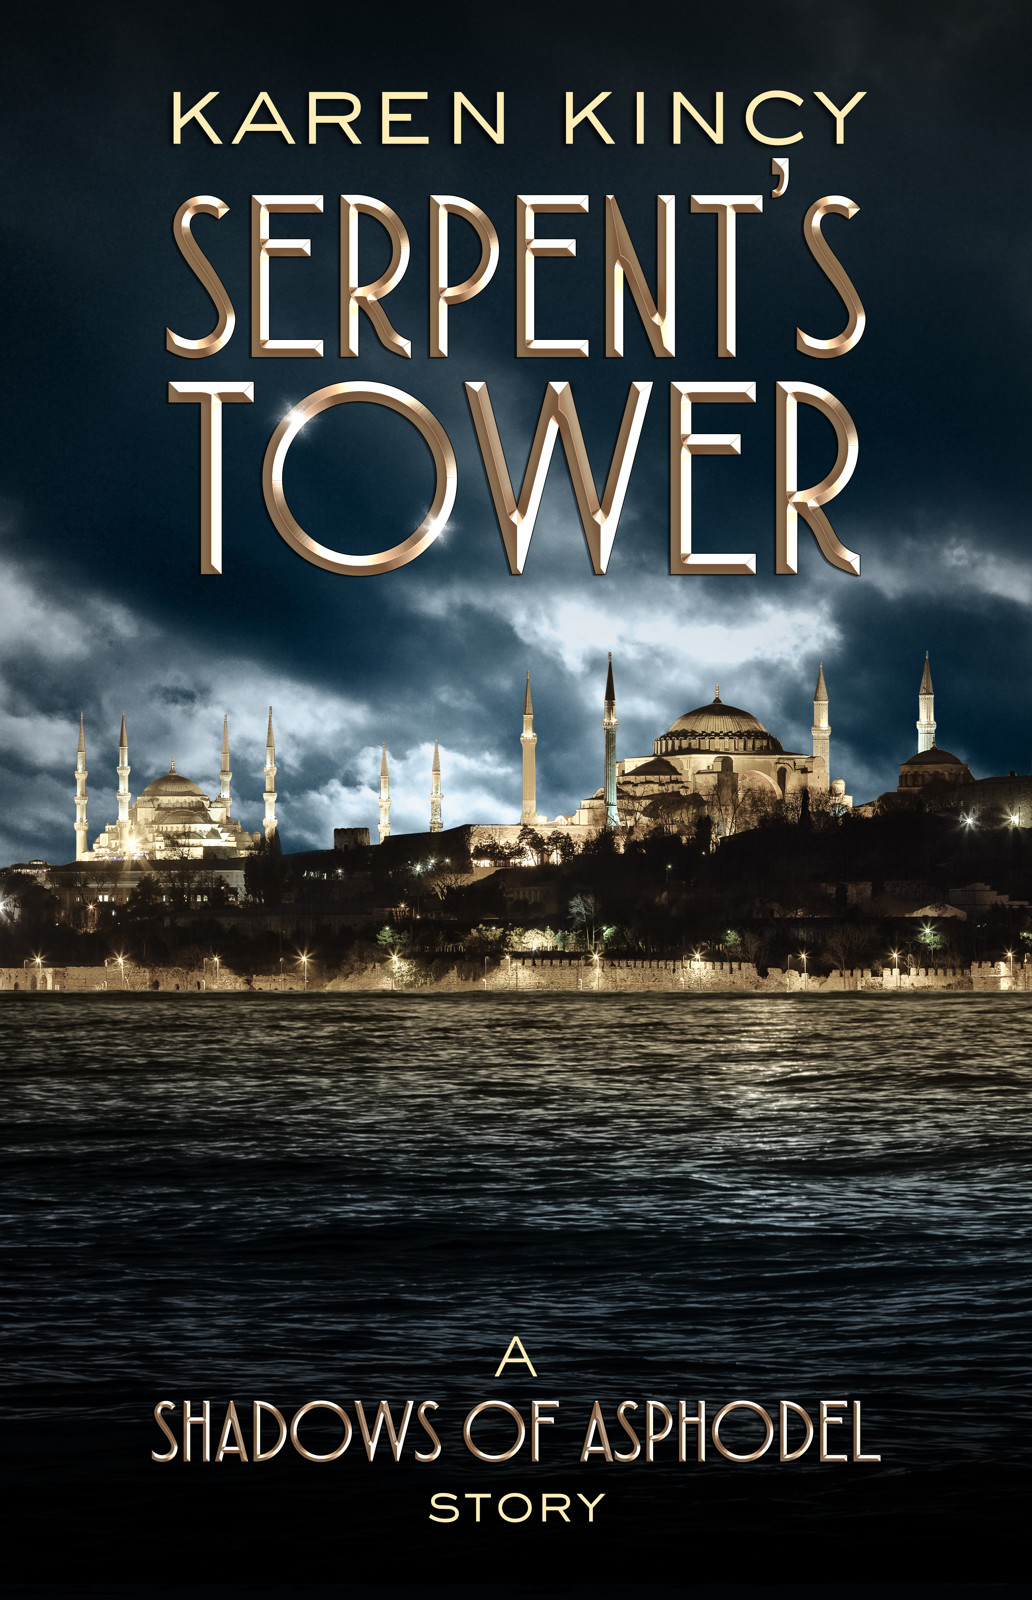 Serpent's Tower